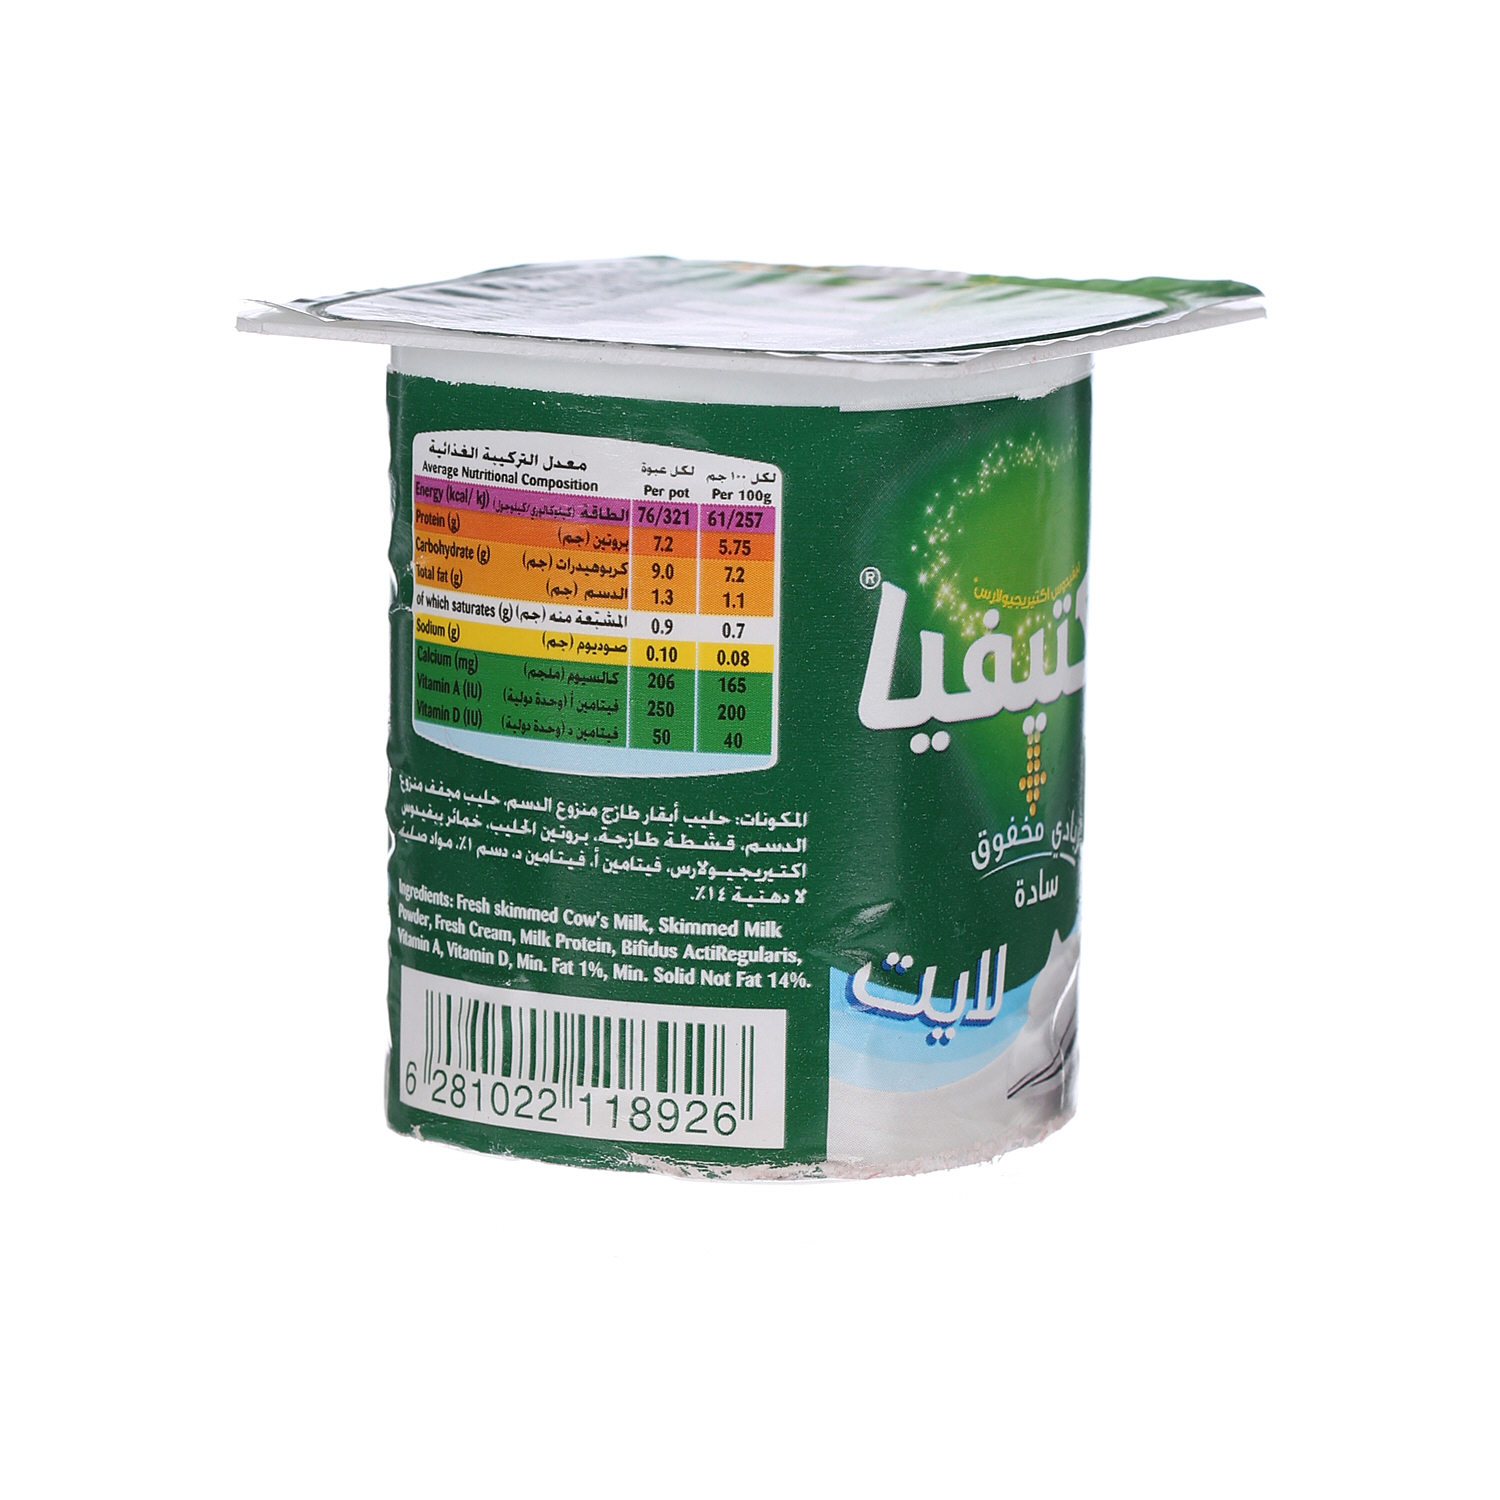 Al Safi Danone Activia Stirred Yoghurt Plain 125 g